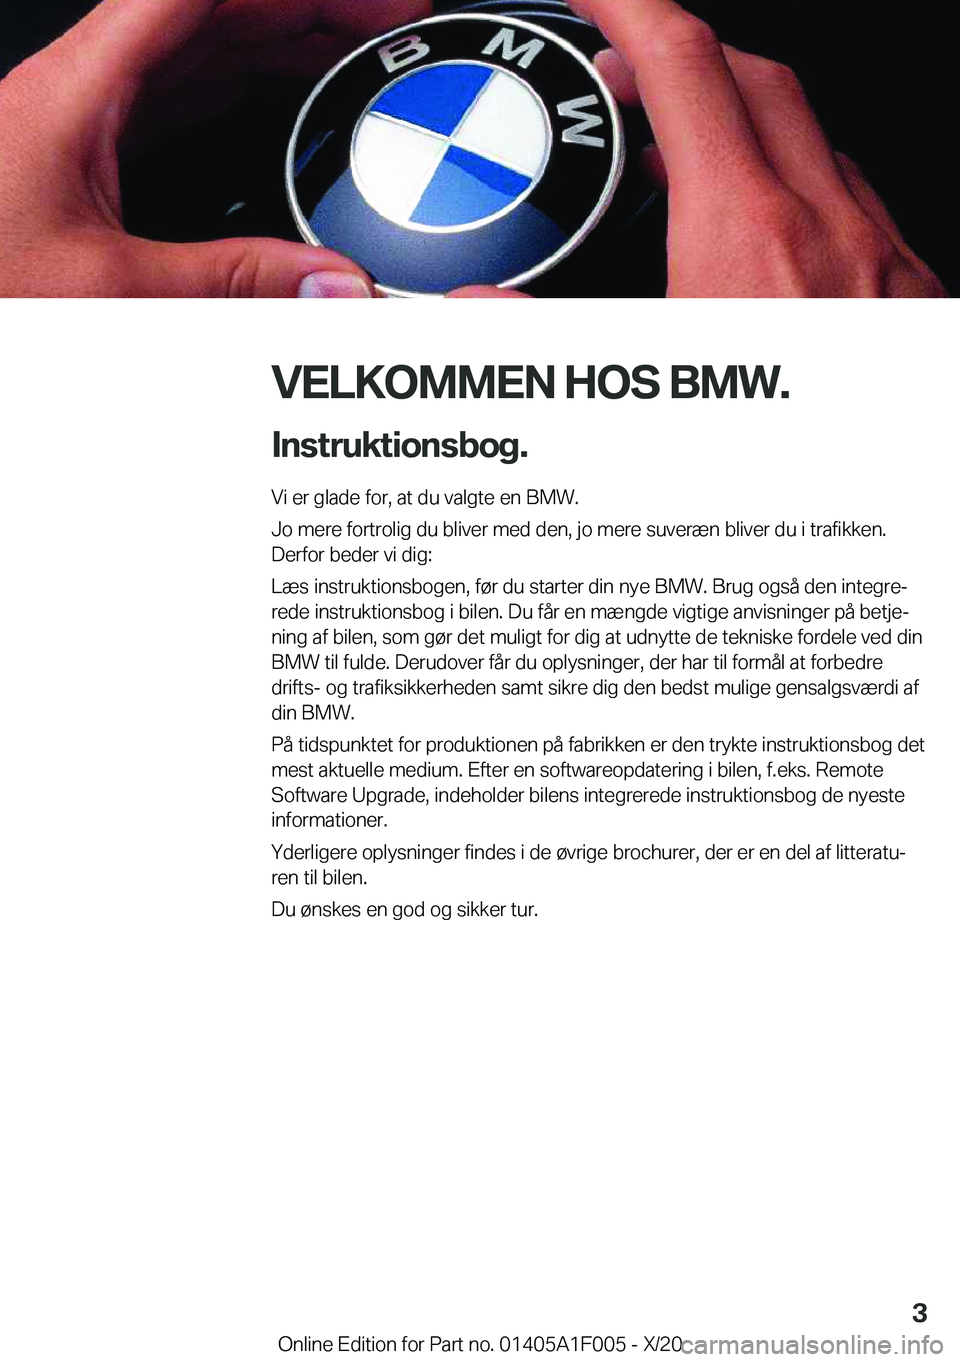 BMW X7 2021  InstruktionsbØger (in Danish) �V�E�L�K�O�M�M�E�N��H�O�S��B�M�W�.
�I�n�s�t�r�u�k�t�i�o�n�s�b�o�g�. �V�i��e�r��g�l�a�d�e��f�o�r�,��a�t��d�u��v�a�l�g�t�e��e�n��B�M�W�.
�J�o��m�e�r�e��f�o�r�t�r�o�l�i�g��d�u��b�l�i�v�e�r�